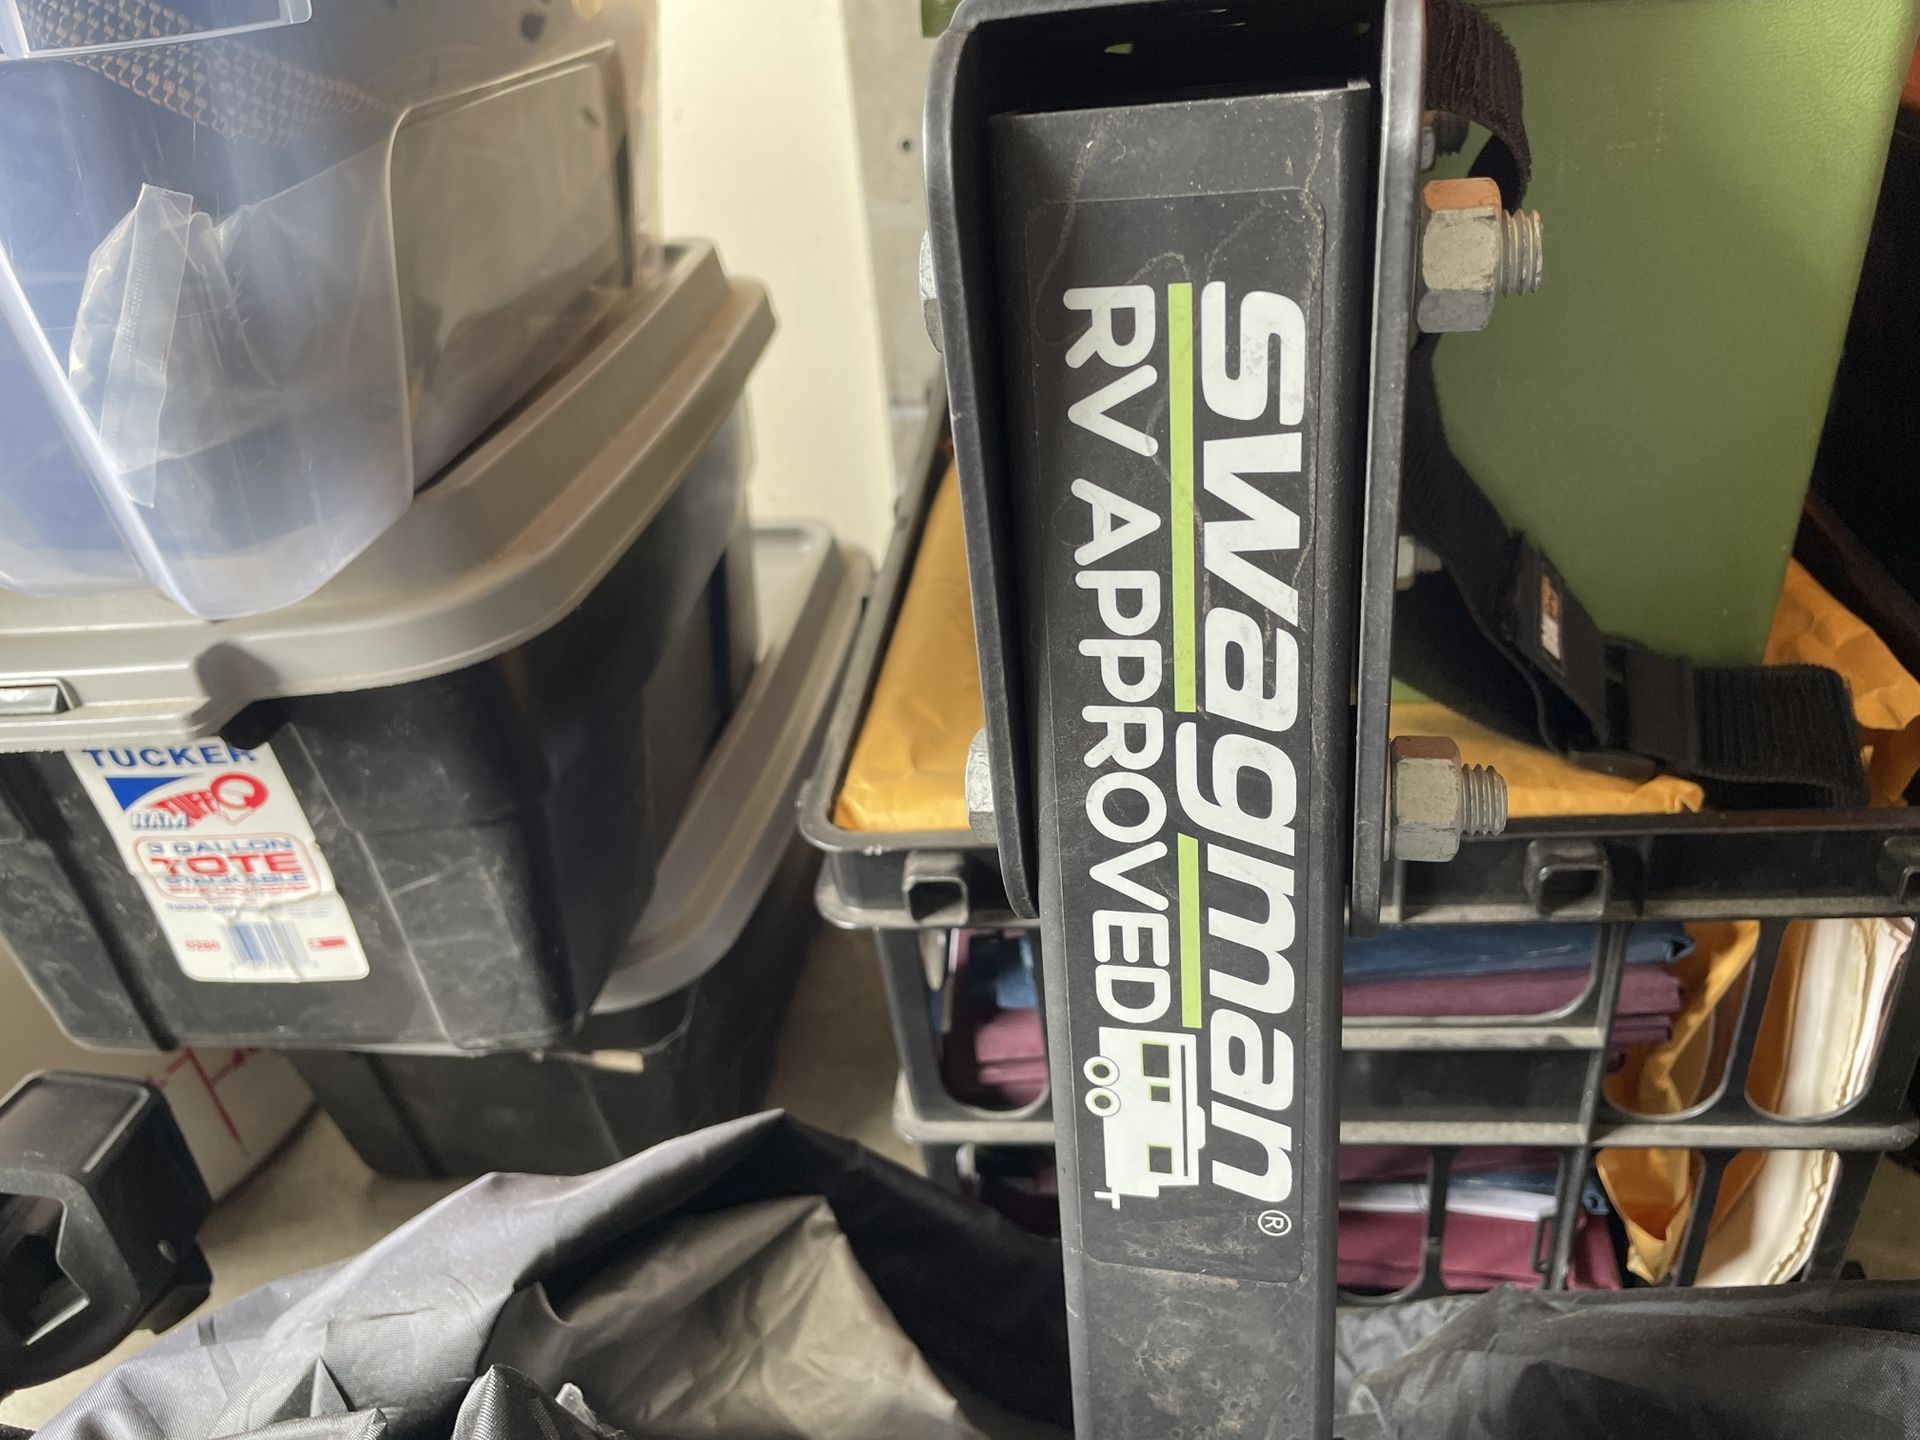 Swagman Heavy Duty 2 Bike Rack Approved For RV